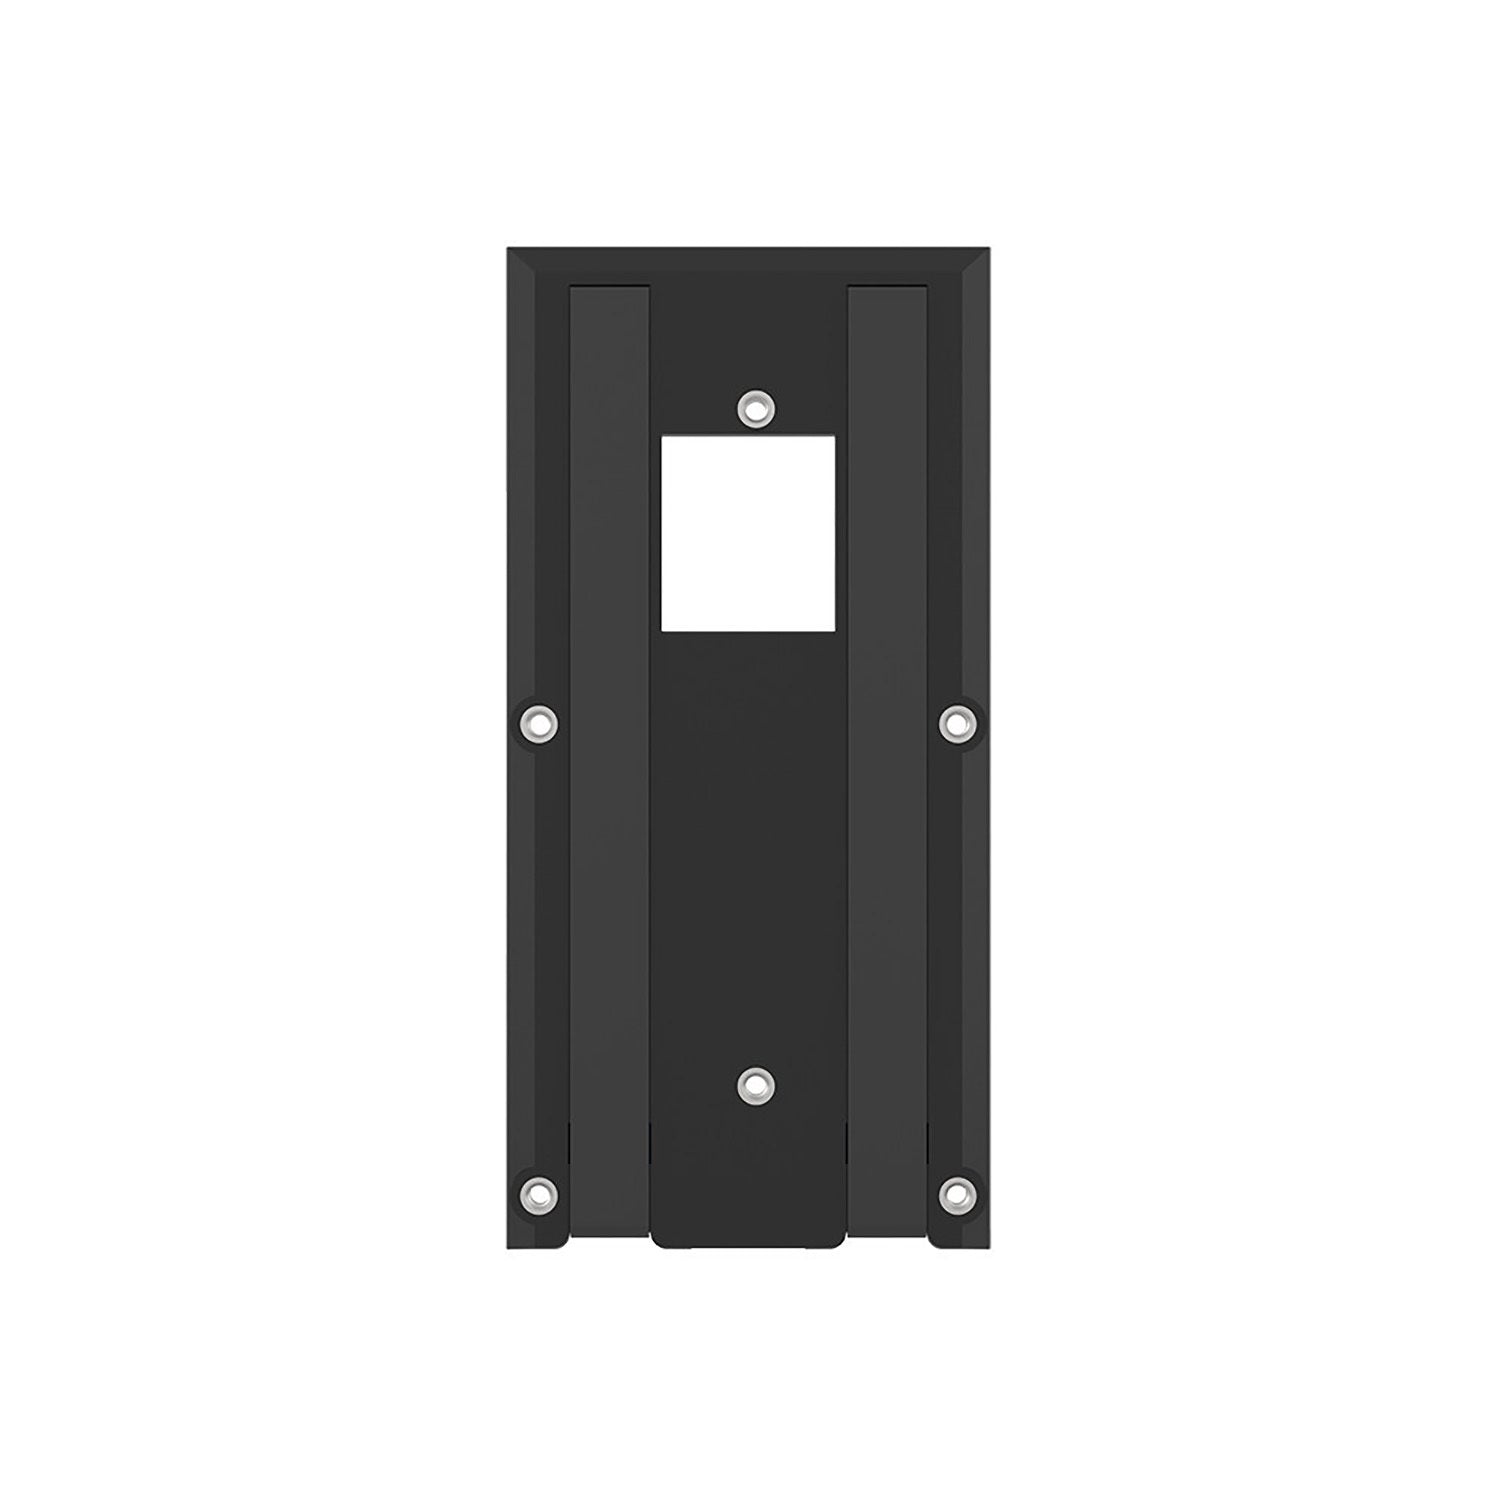 No-Drill Mount (for Video Doorbell 3, Video Doorbell 3 Plus, Video Doorbell 4, Battery Doorbell Plus, Battery Doorbell Pro) - No-Drill Mount (for Video Doorbell 3, Video Doorbell 3 Plus, Video Doorbell 4, Battery Doorbell Plus) - 